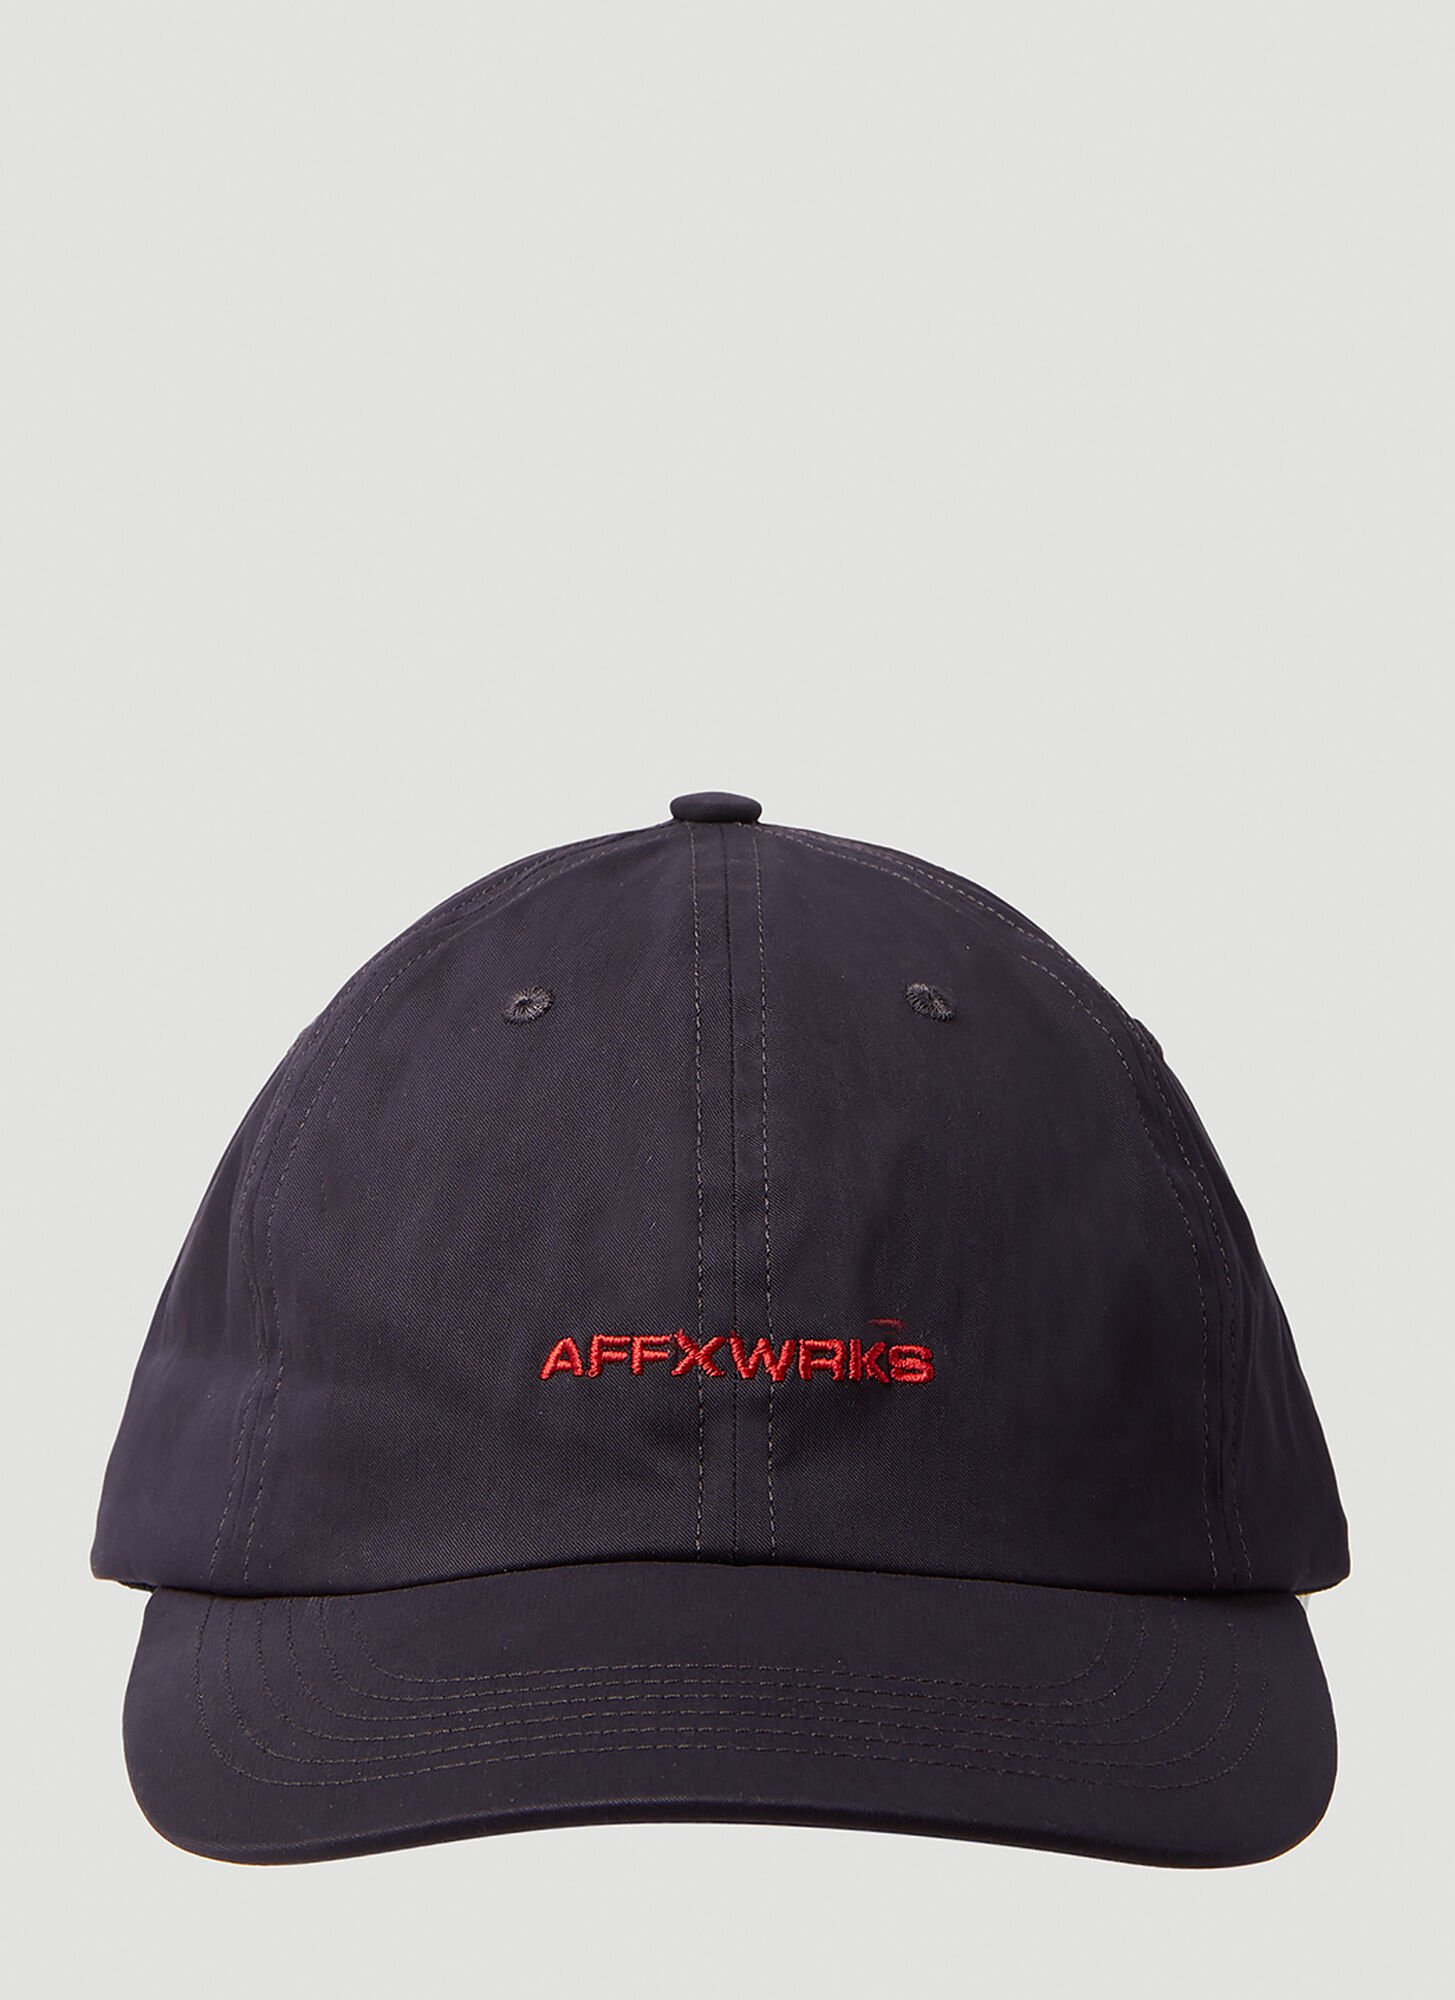 Affxwrks Logo Embroidery Baseball Cap In Black